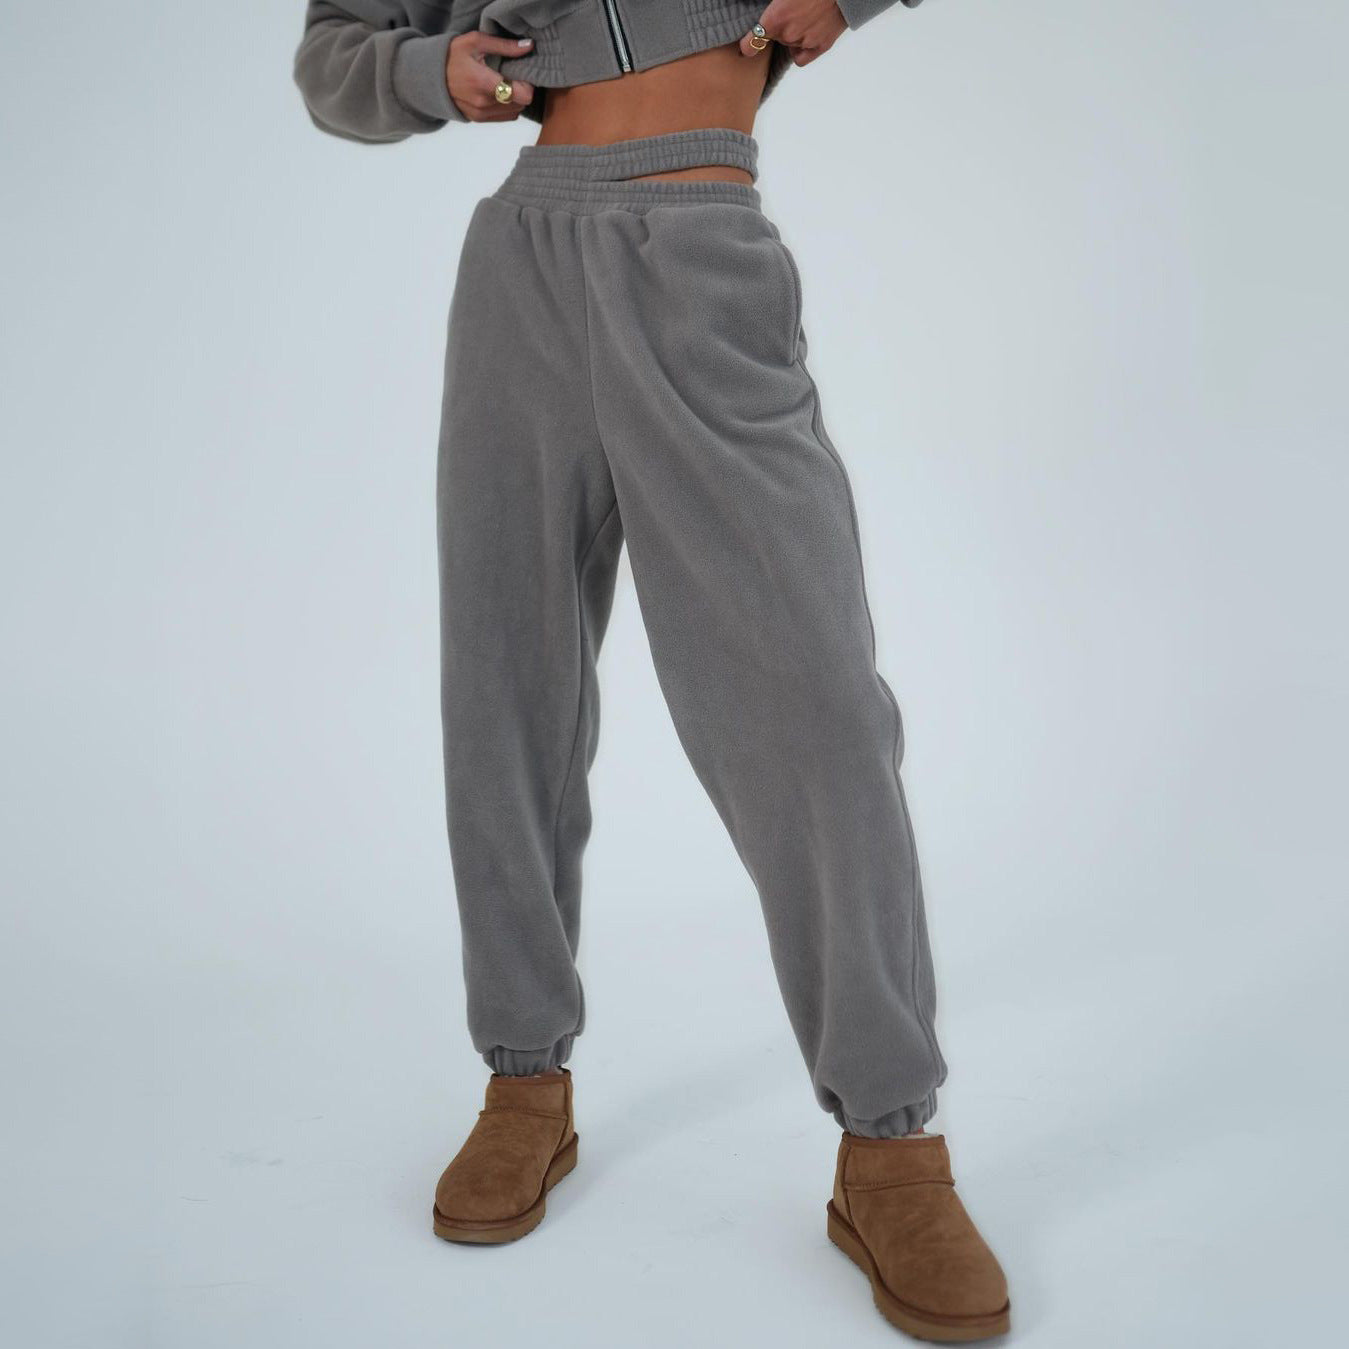 Y2g Women's Hot Girl Double Pants Sweater Suit Two-piece Set